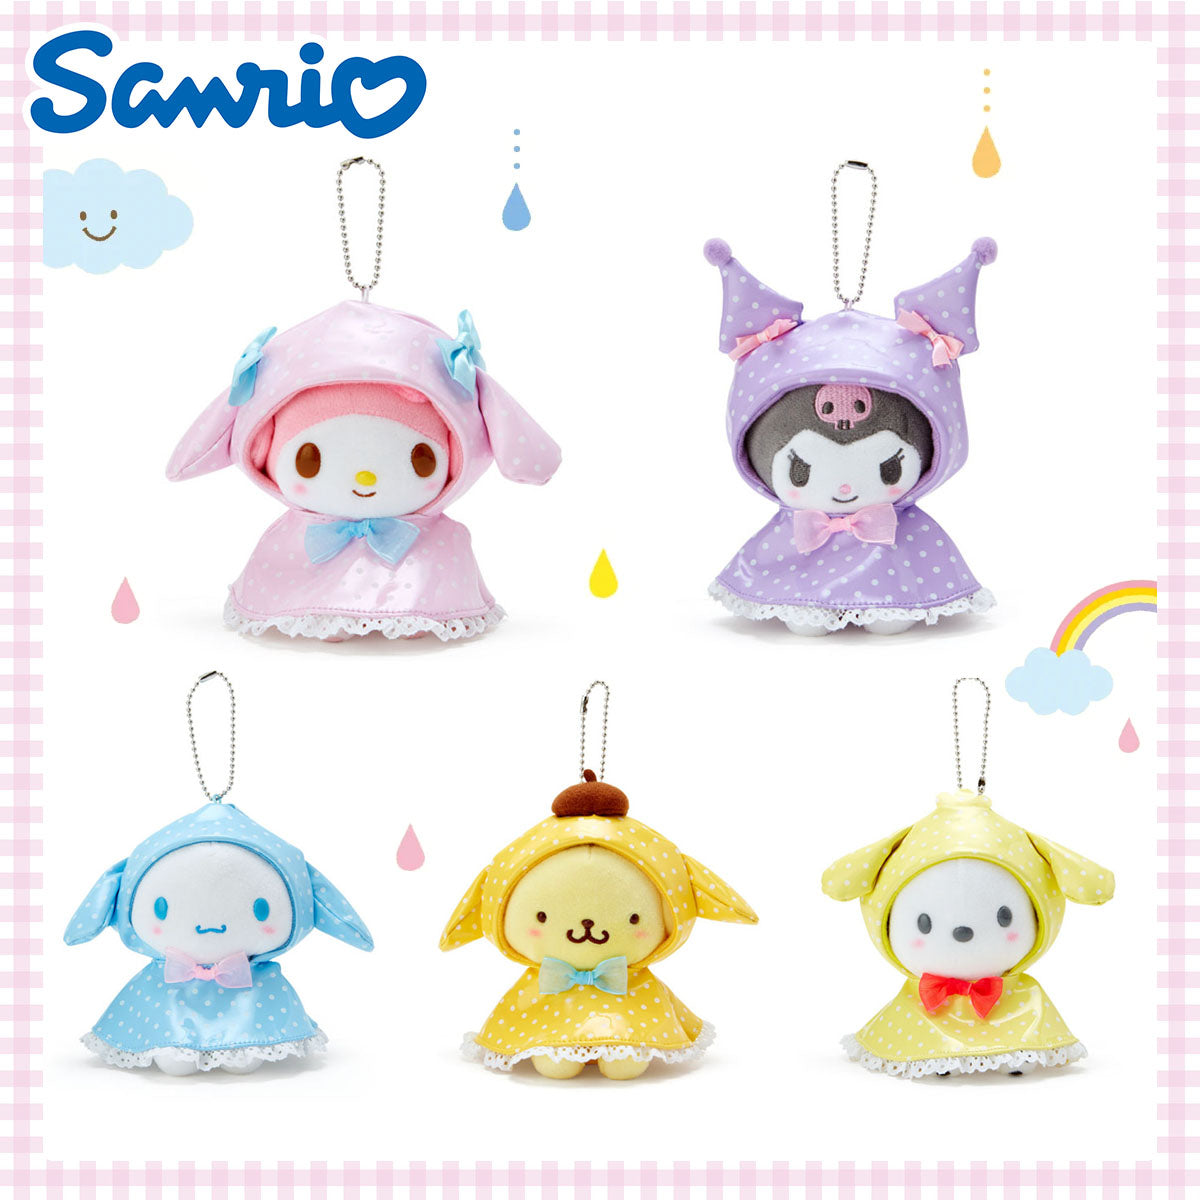 Hanging Plush - Sanrio Characters with Raincoat (Japan Edition)